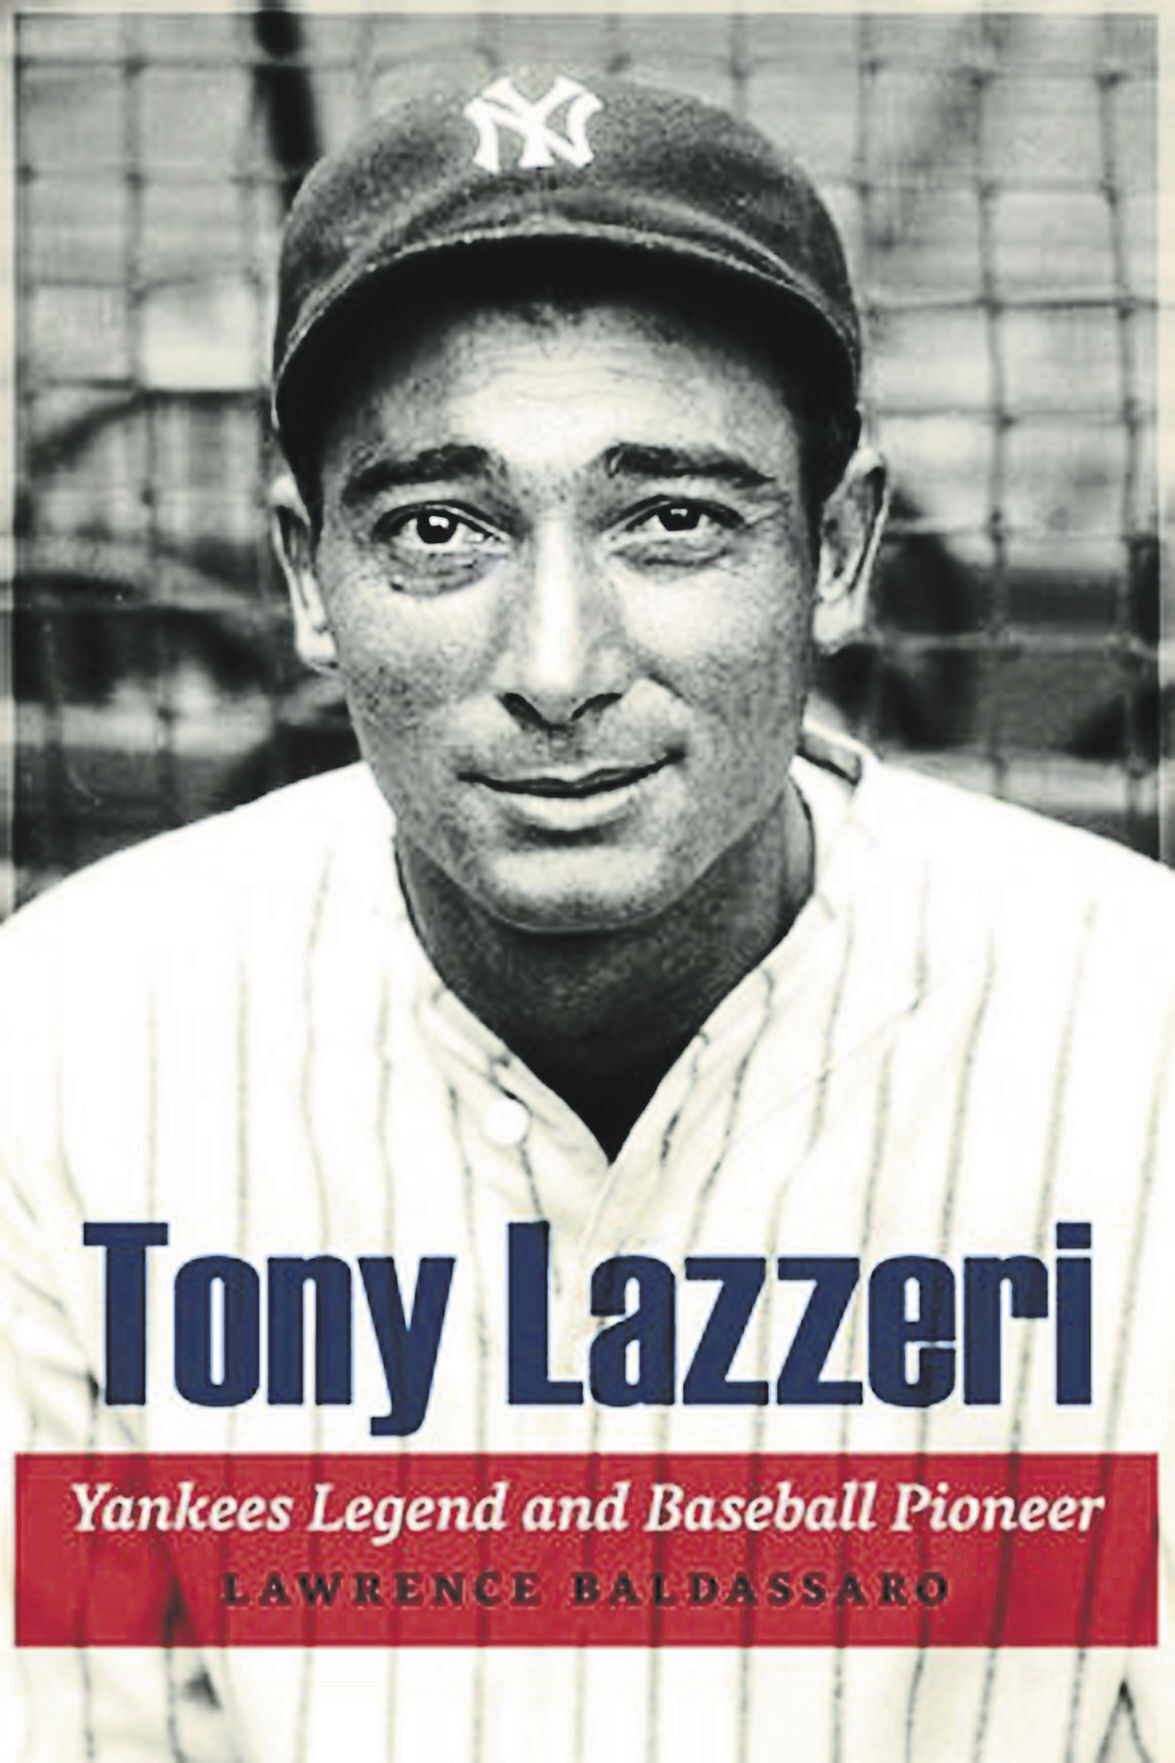 “Tony Lazzeri: Yankees Legend and Baseball Pioneer” by Lawrence Baldassaro.    PHOTO CREDIT: Tribune News Service